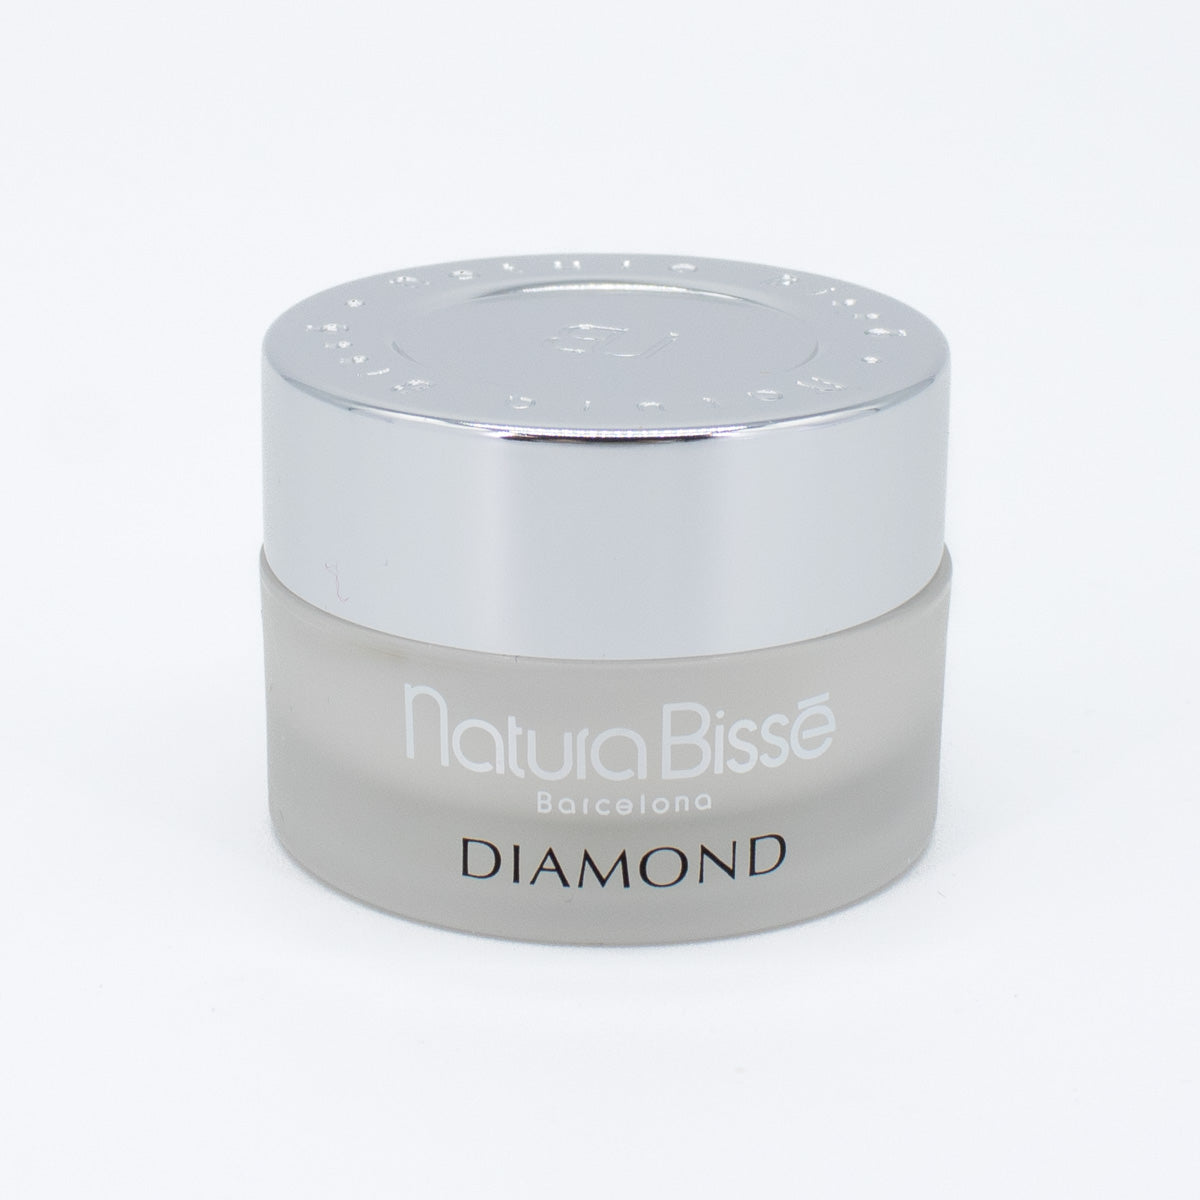 Natura Bisse Diamond Extreme Anti-Aging Bio-Regenerative Extreme Cream 0.5oz - Imperfect Box